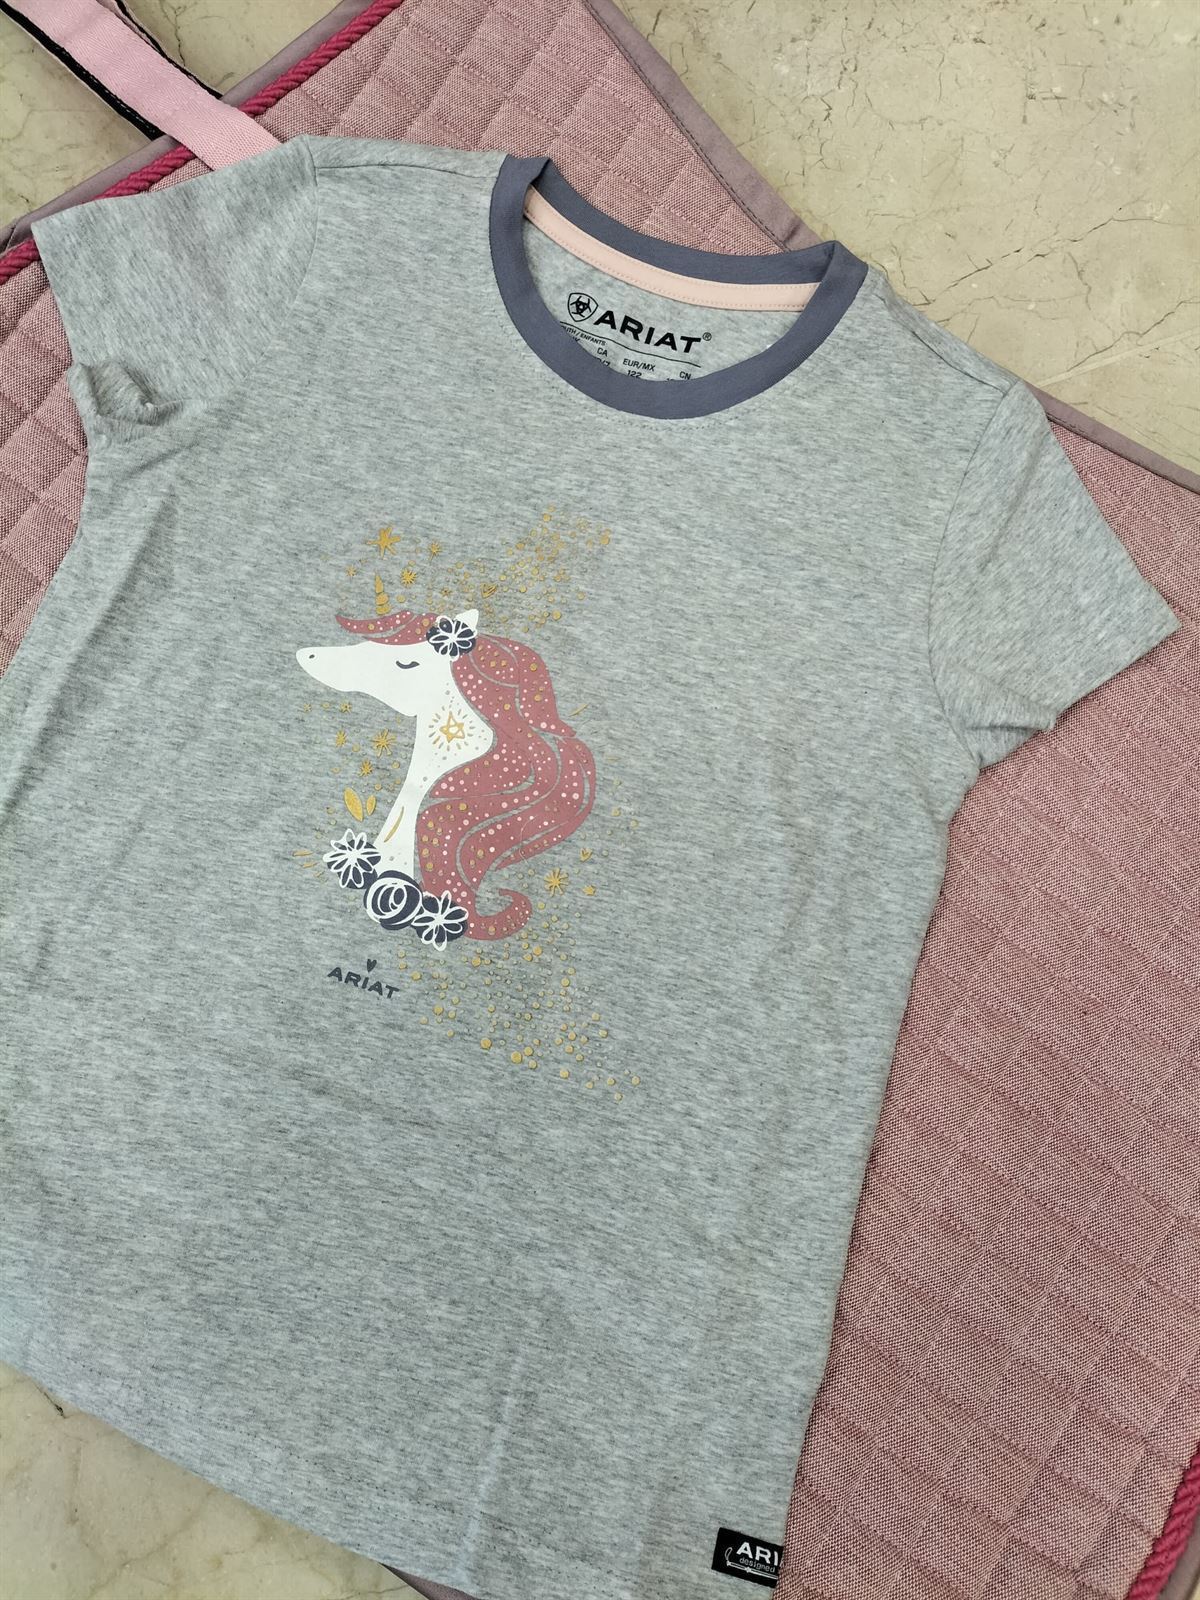 Camiseta Ariat Imagine tallaje infantil color gris caballo rosa TALLA 7 - Imagen 1